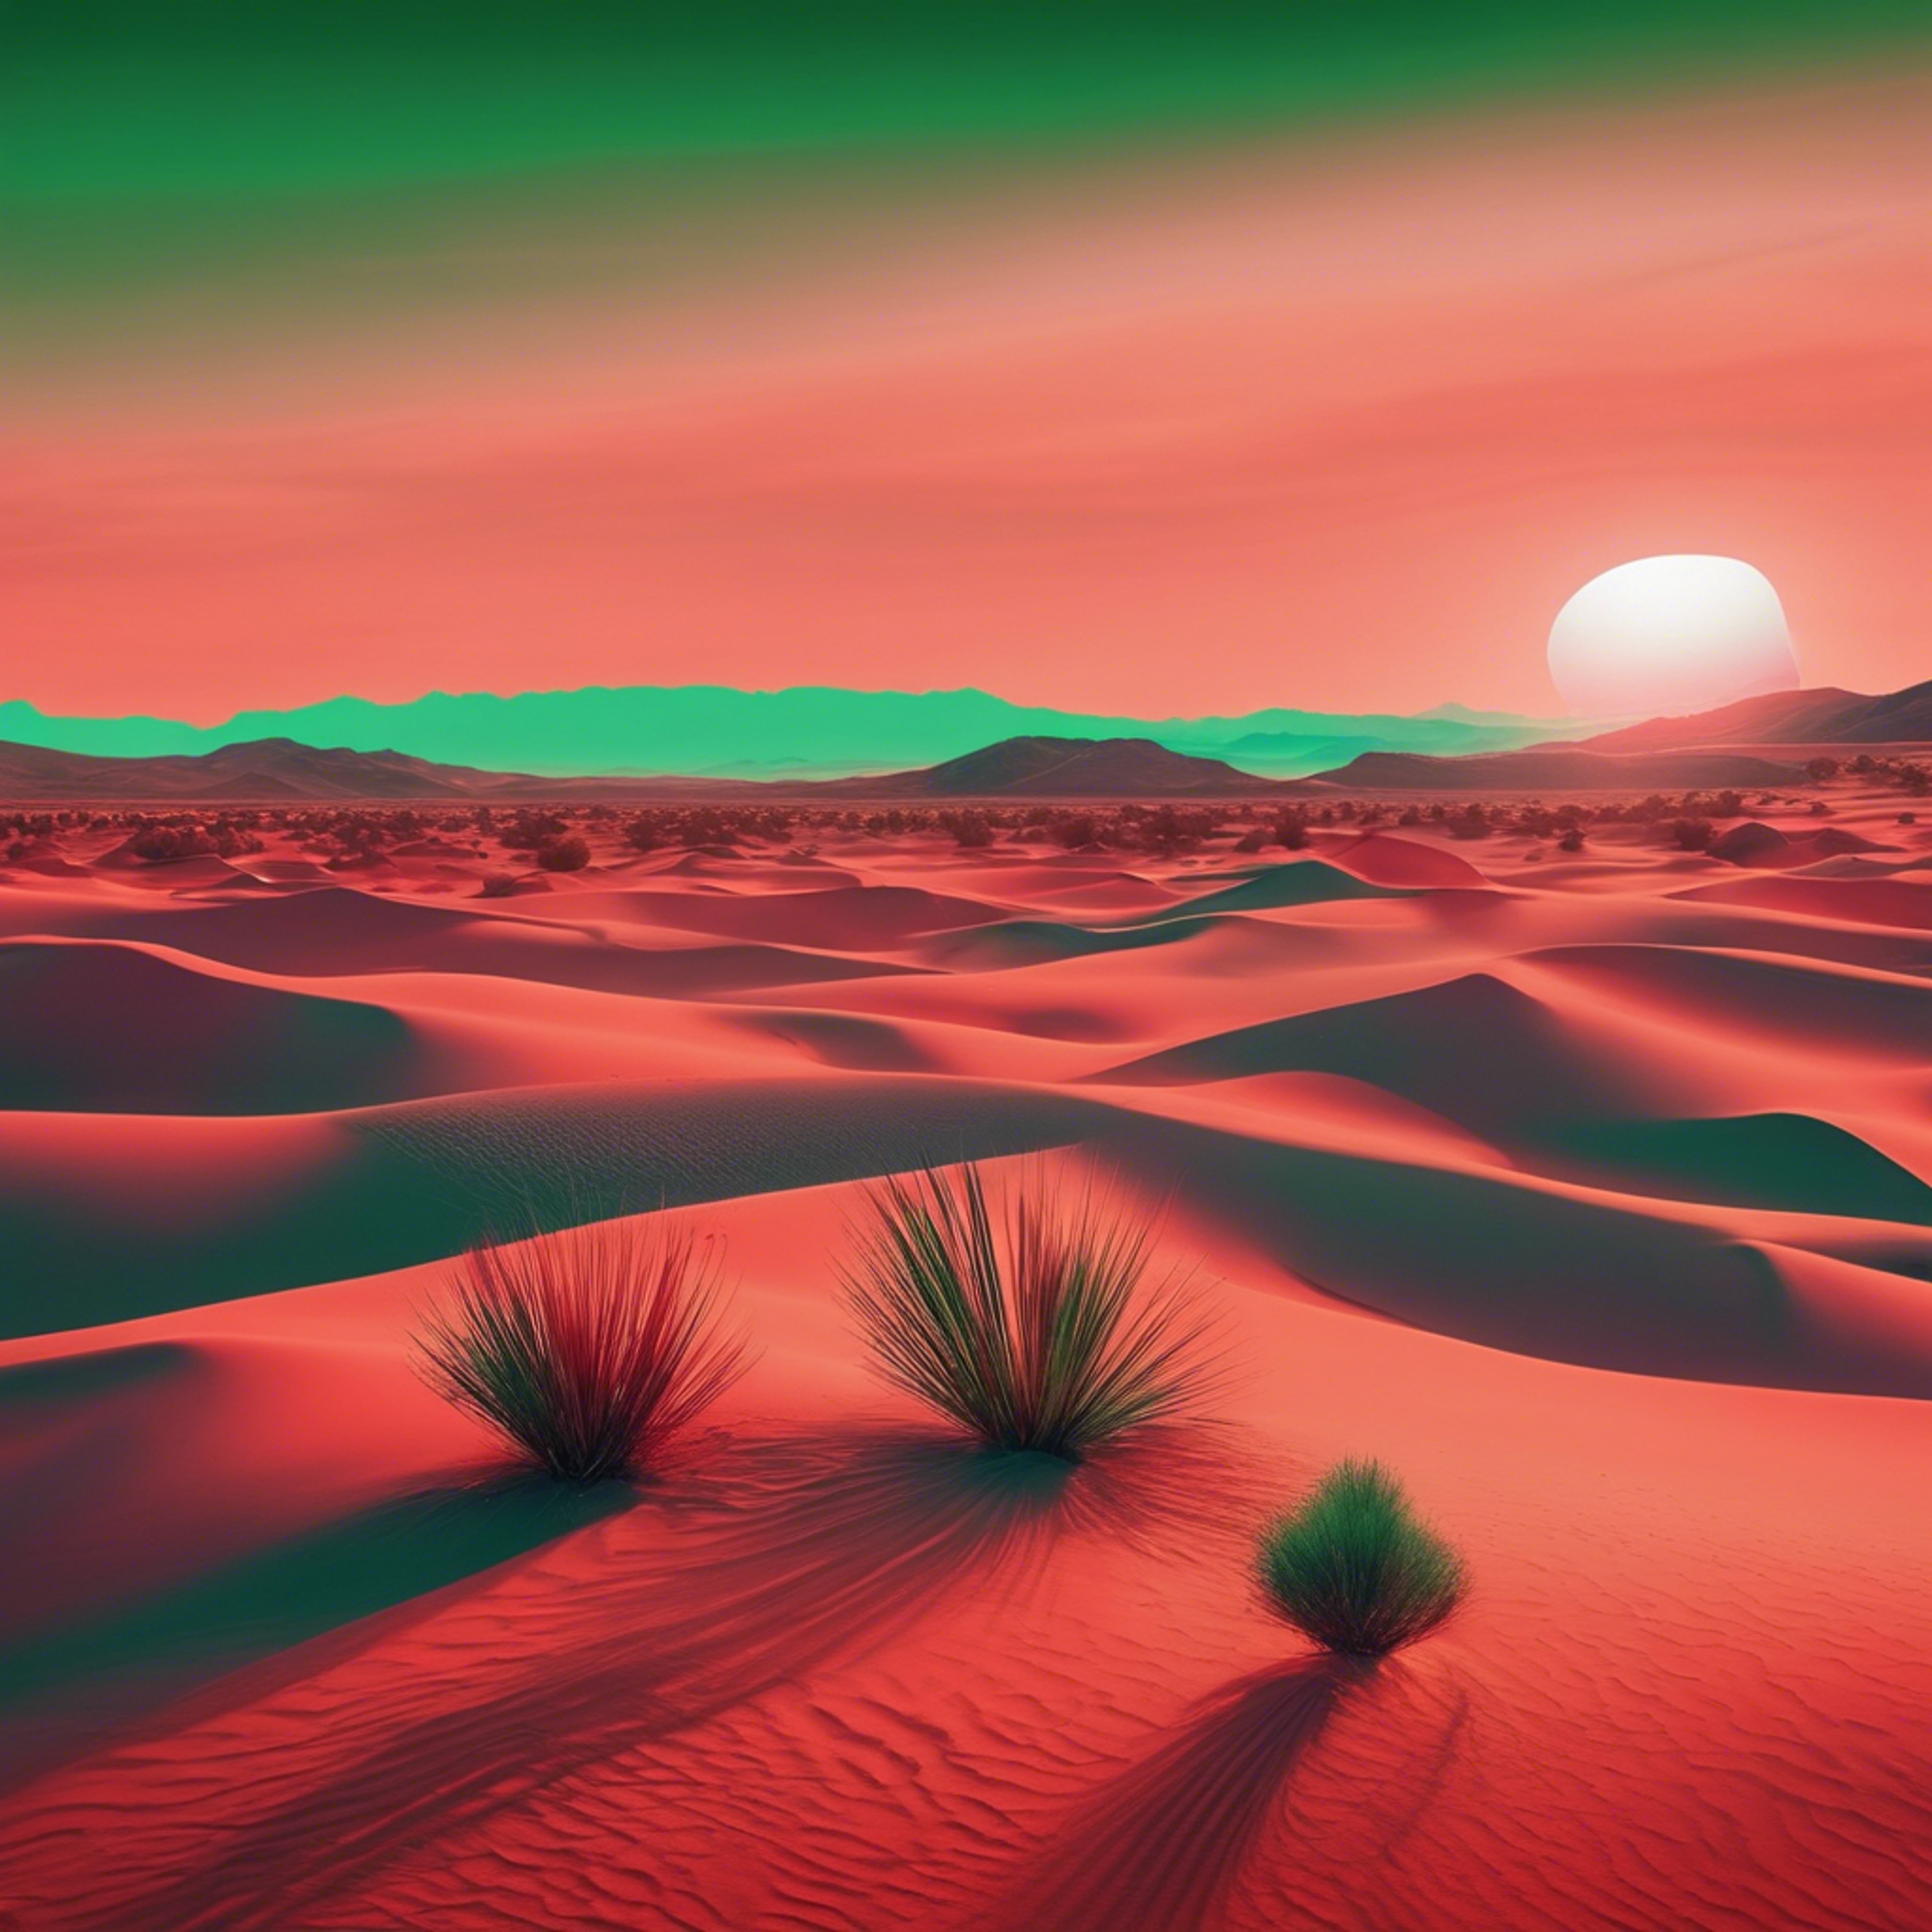 Abstract mirage in red and green, reminiscent of a modern artist's take on a desert sunset duvar kağıdı[3a4ec3a043b54638a7ad]